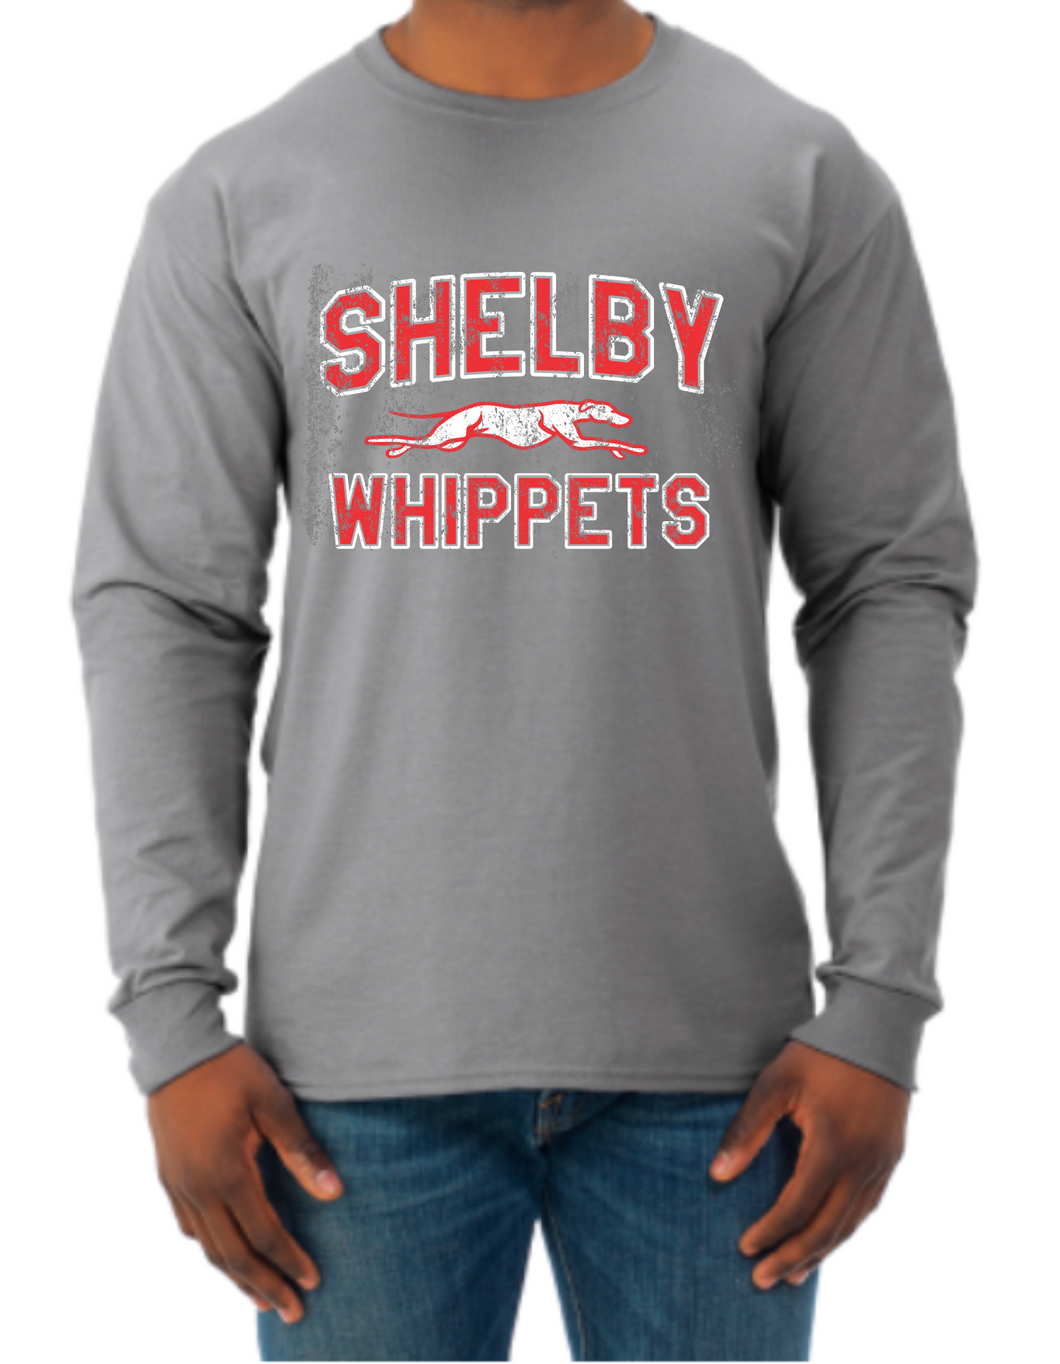 Shelby Whippet SW Dog Long Sleeve T-Shirt